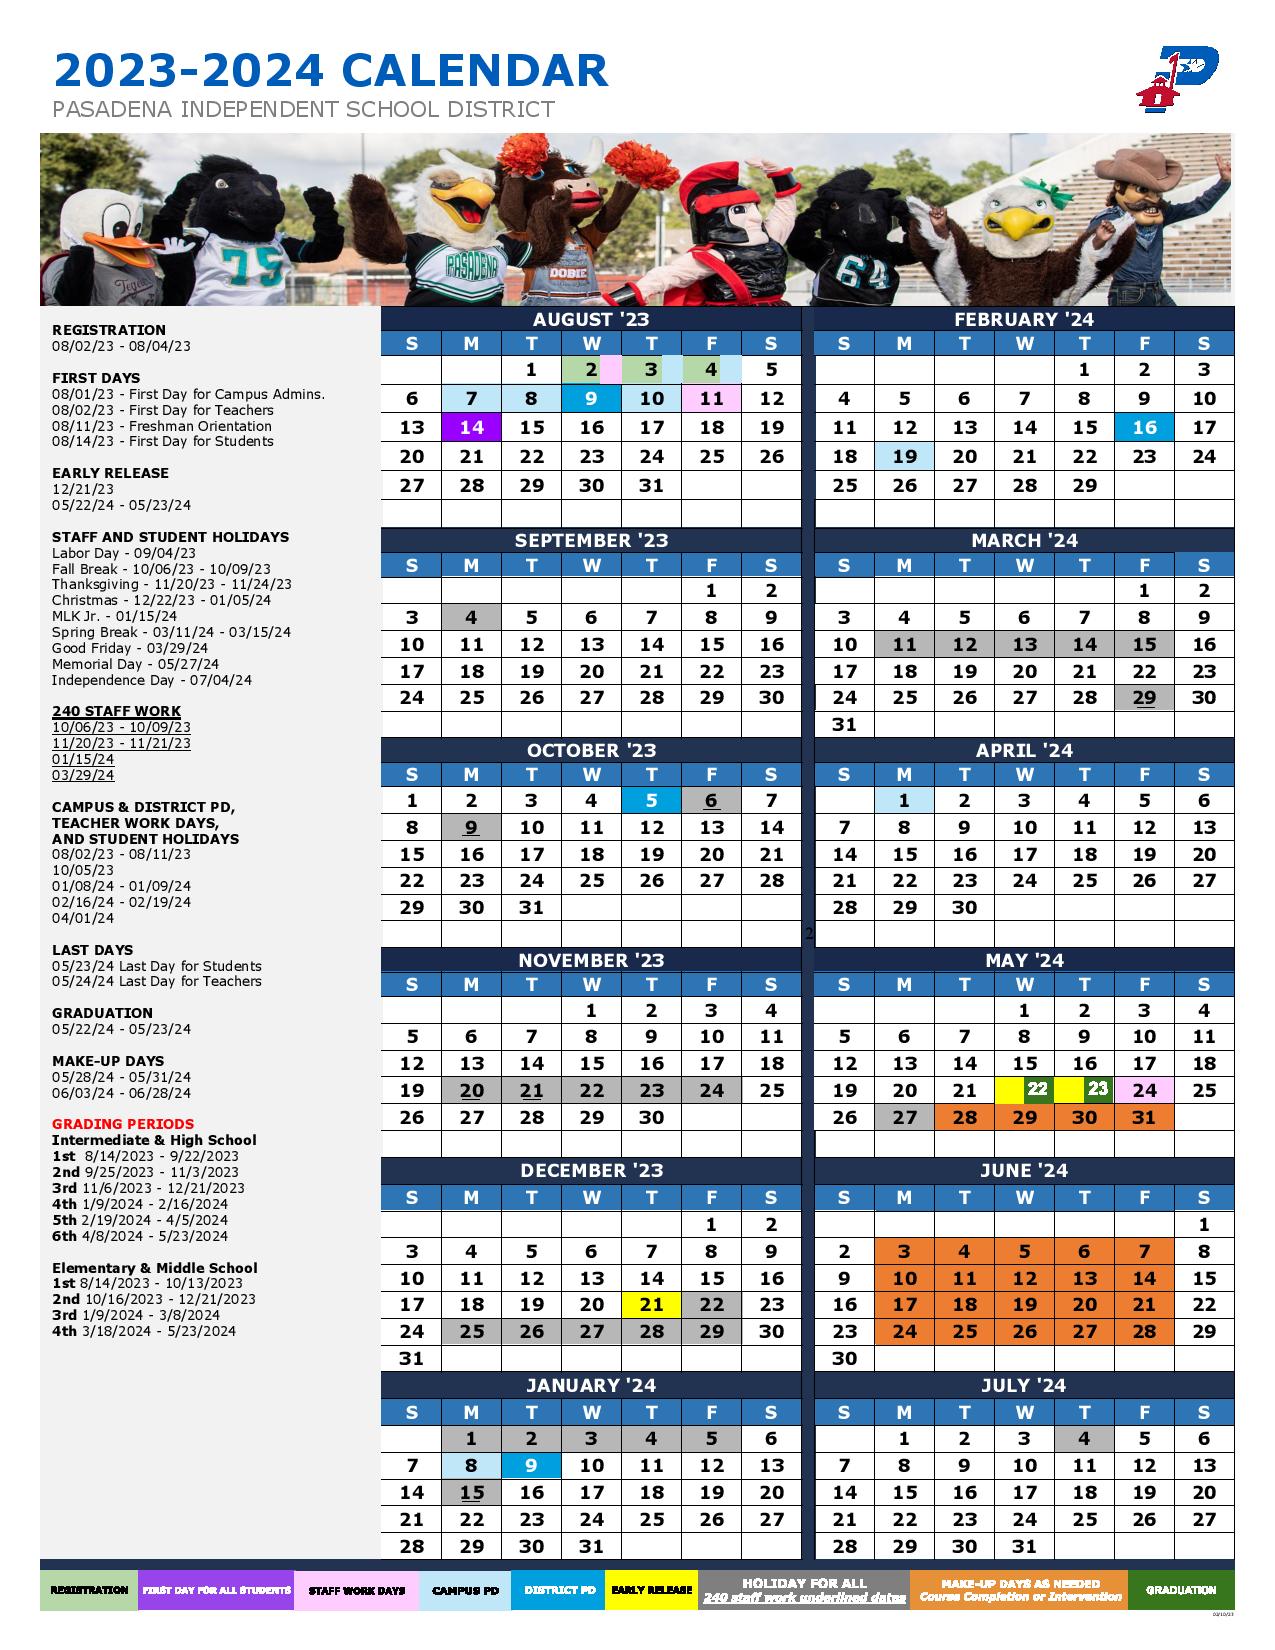 pasadena-independent-school-district-calendar-2023-2024